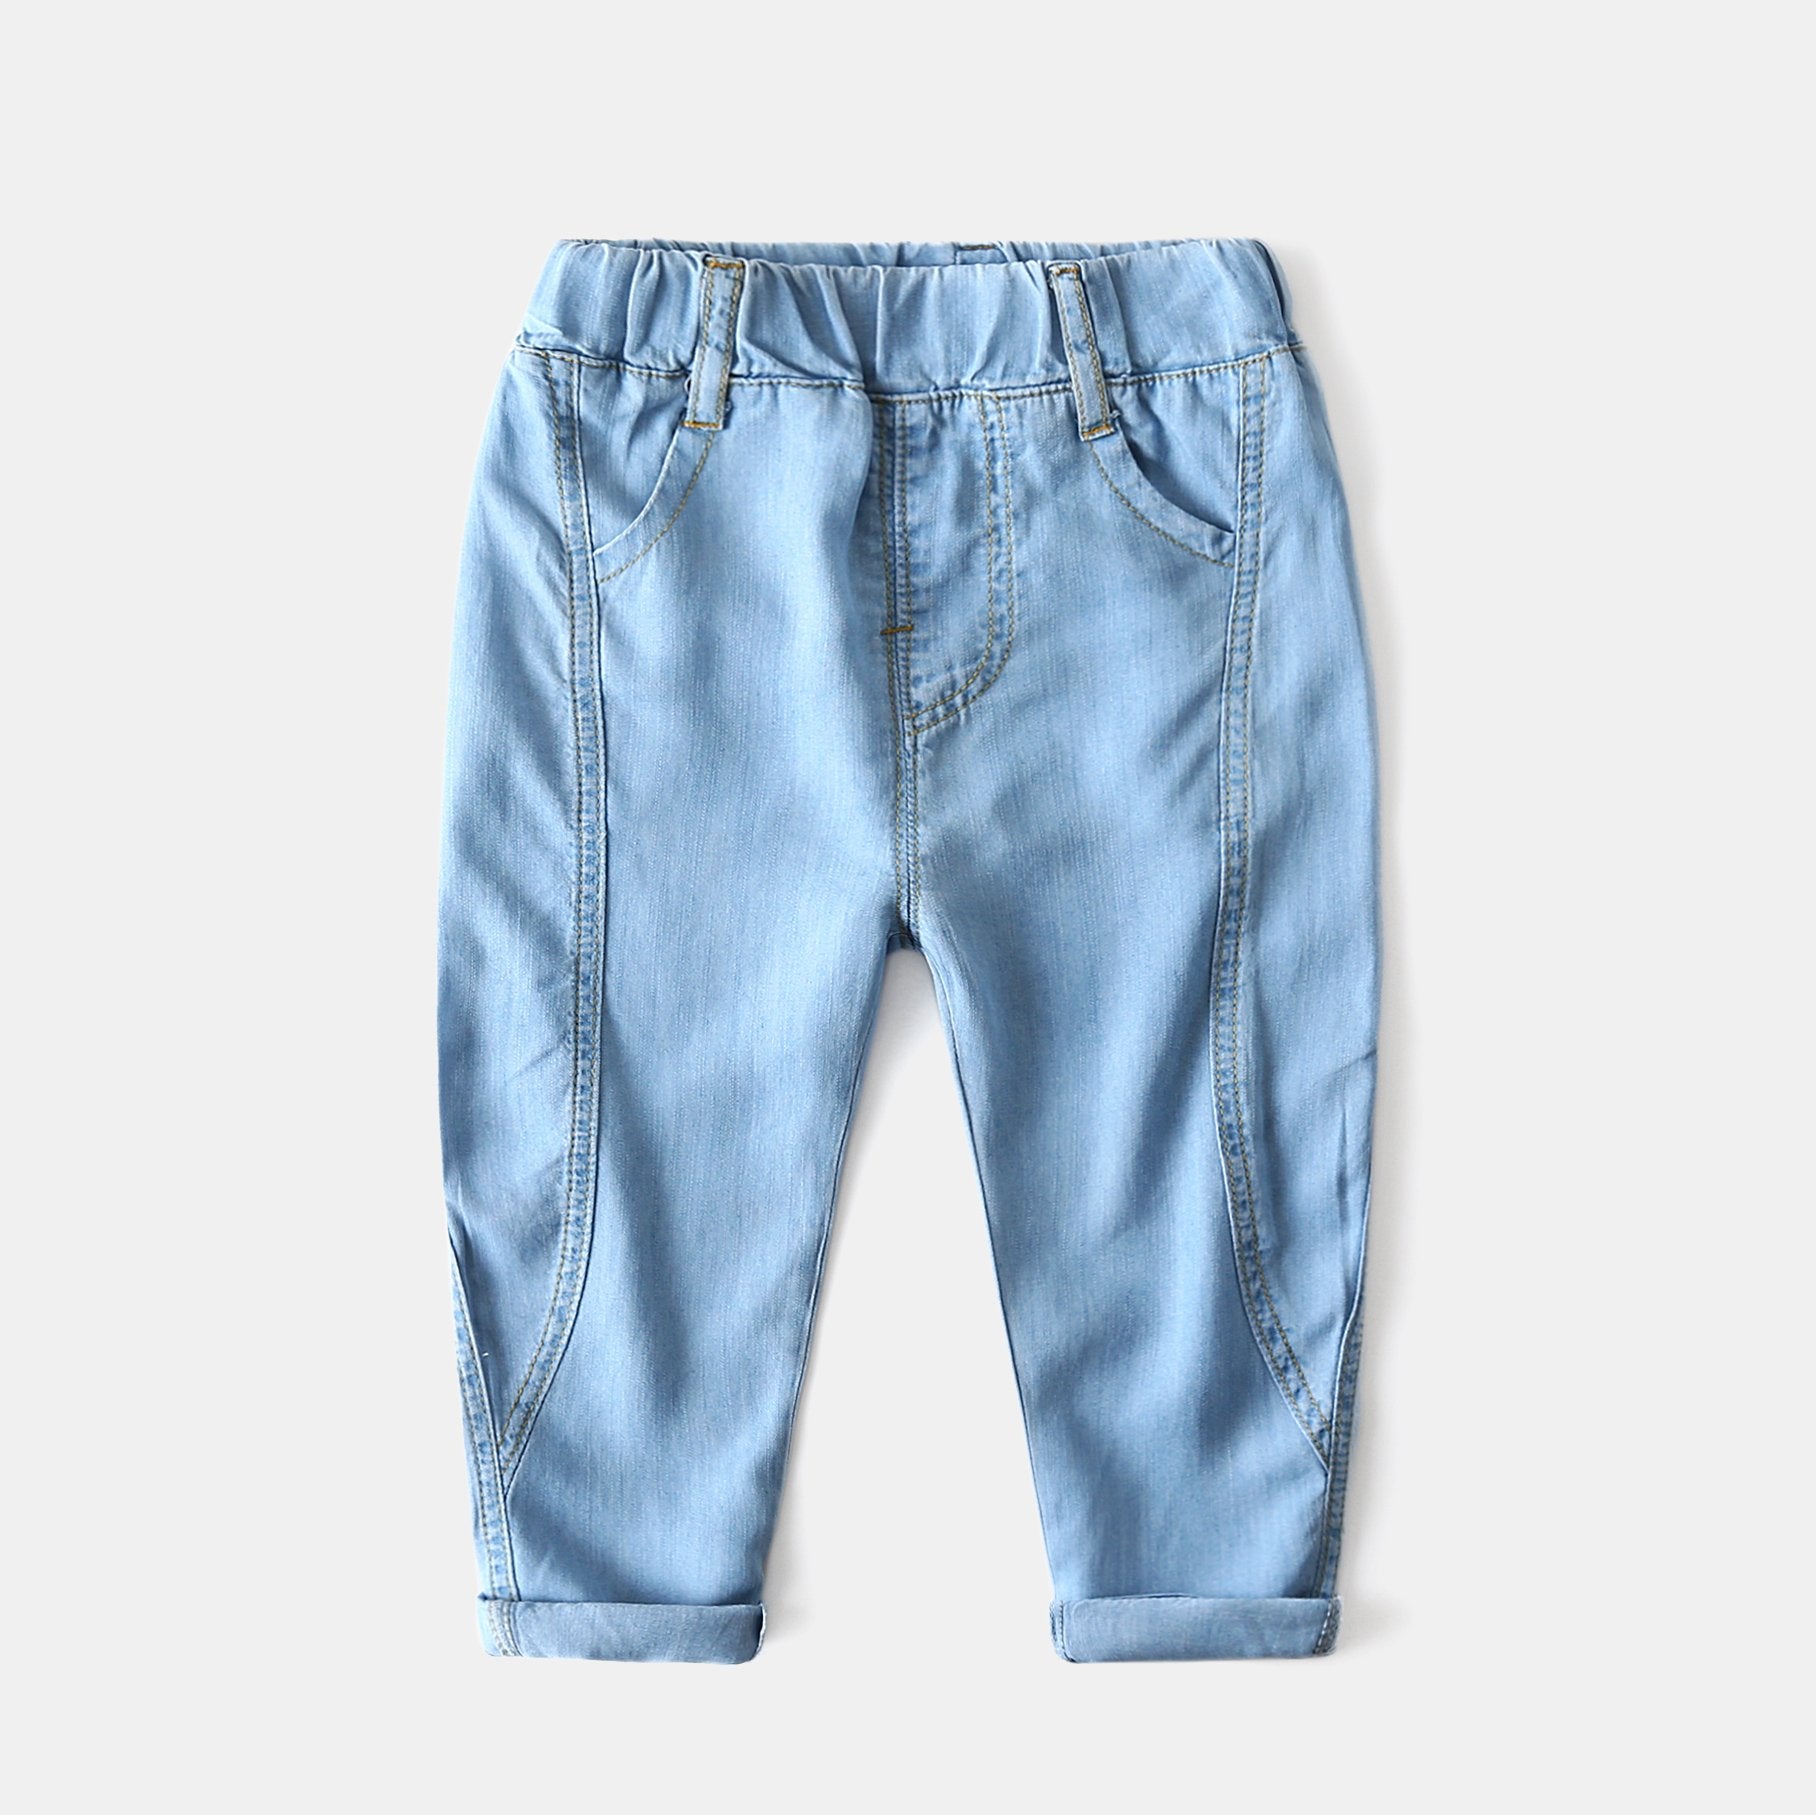 Boys Jeans Tencel Mosquito Pants Trendy Kids Wholesale Clothing